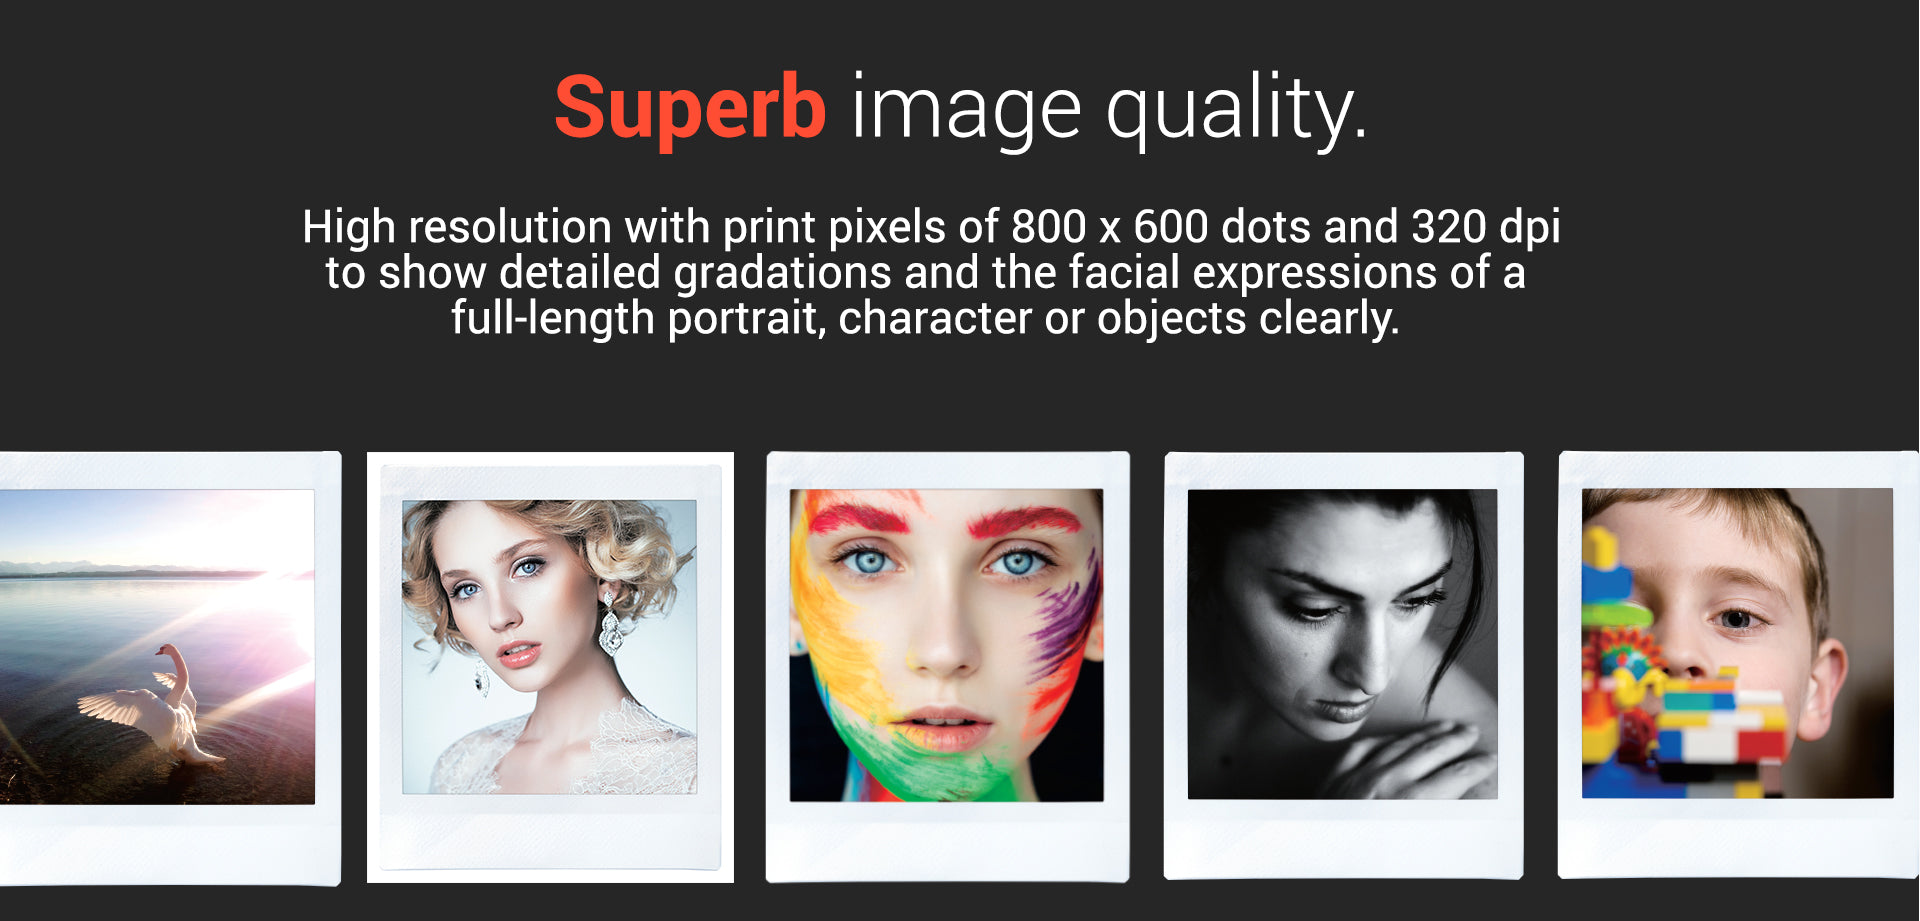 Instax Share SP3 Square Plus - Superb Image Quality